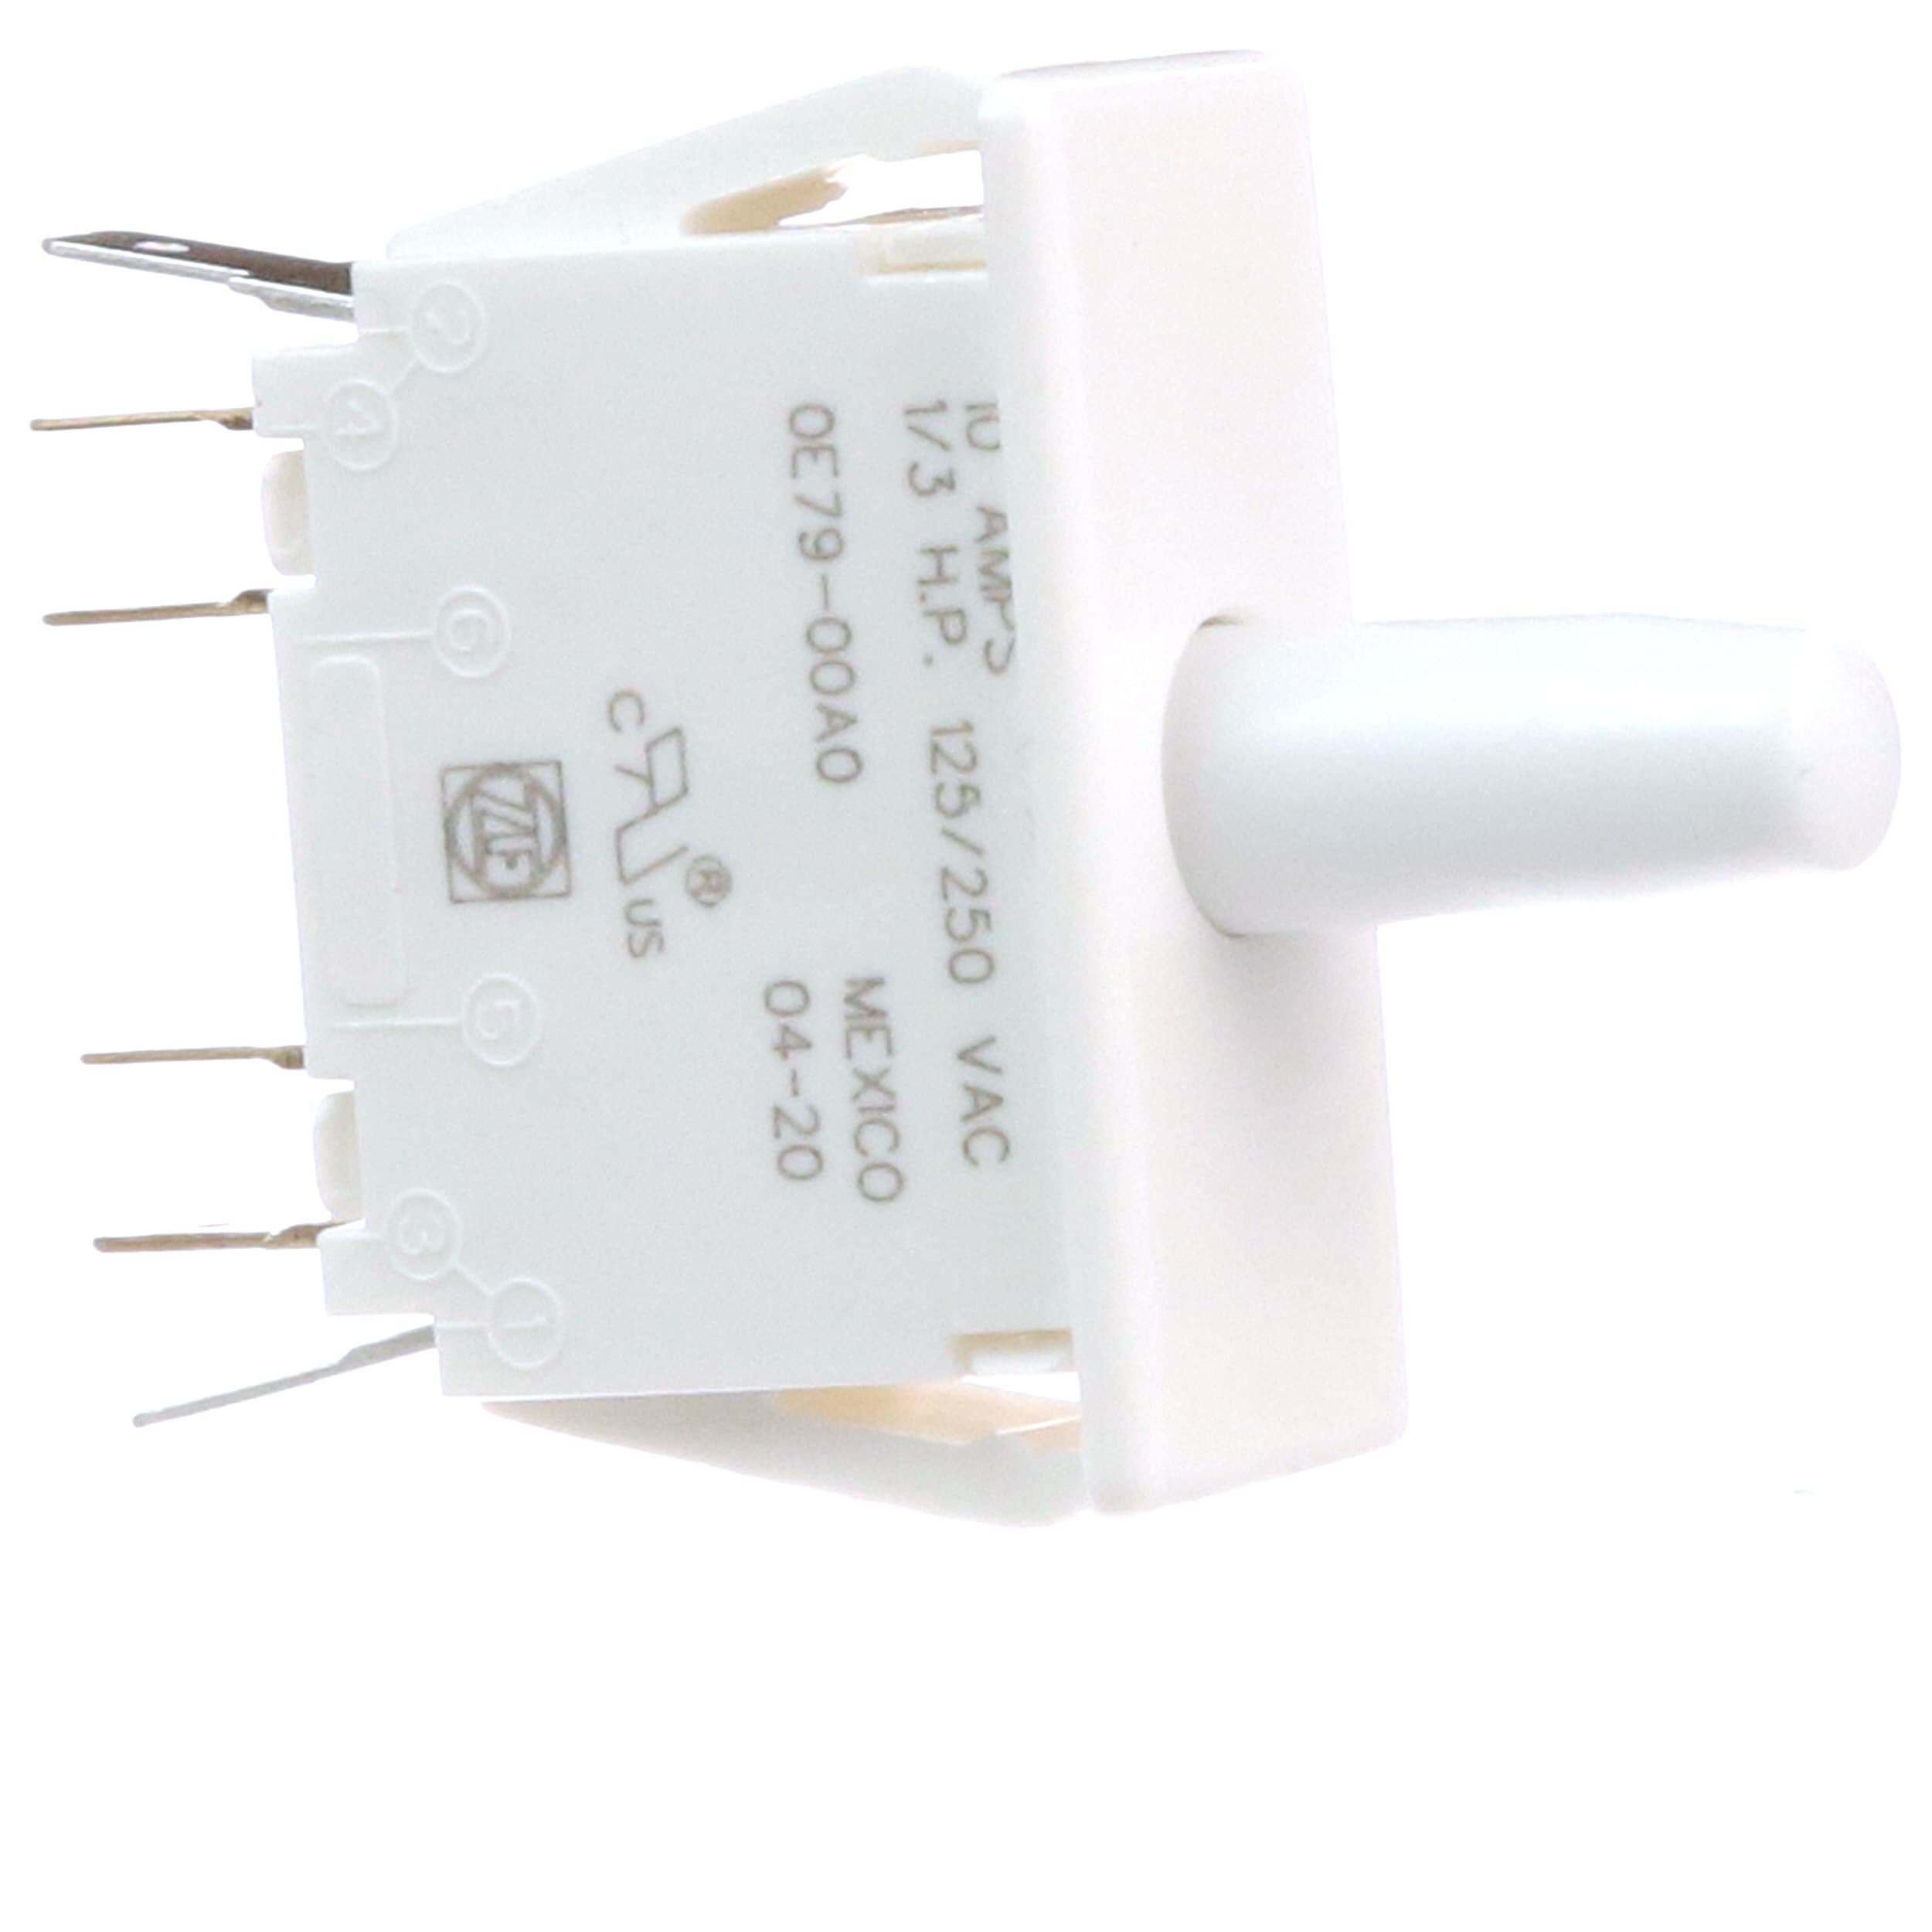 ZF Electronics - 0E79-00A0 - Switch, Pushbutton, DPDT, NO/NC